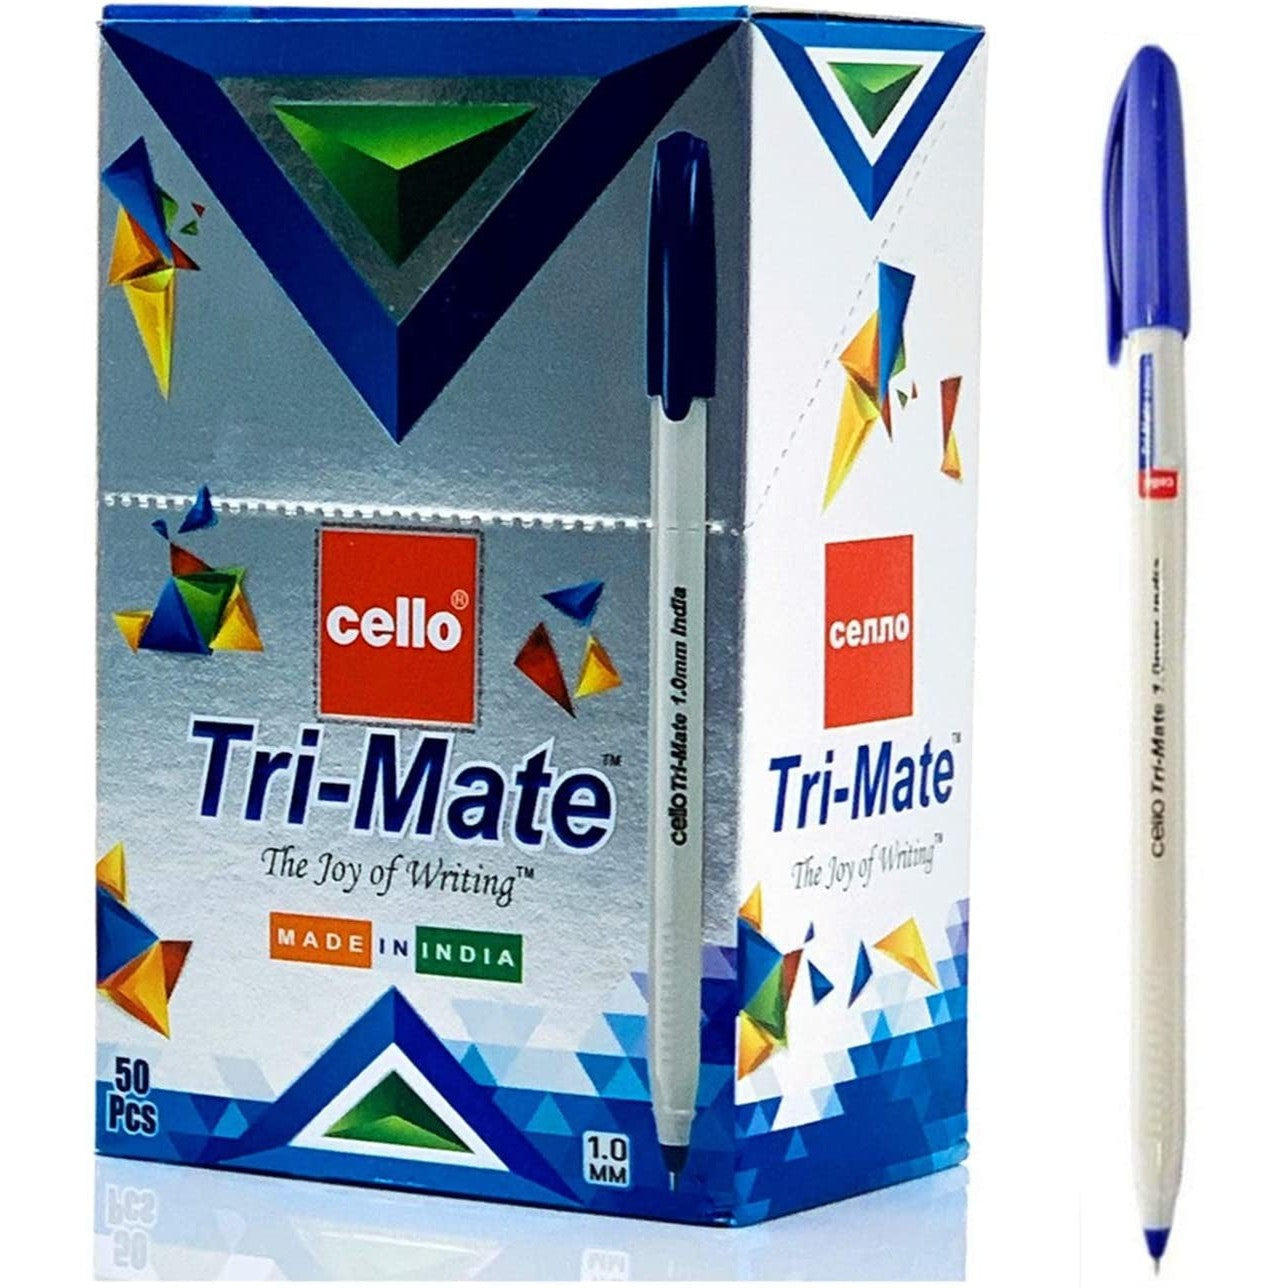 Cello Tri-Mate Pen 1.0Mm 50Pcs/Box-Pens-Cello-Blue-Star Light Kuwait